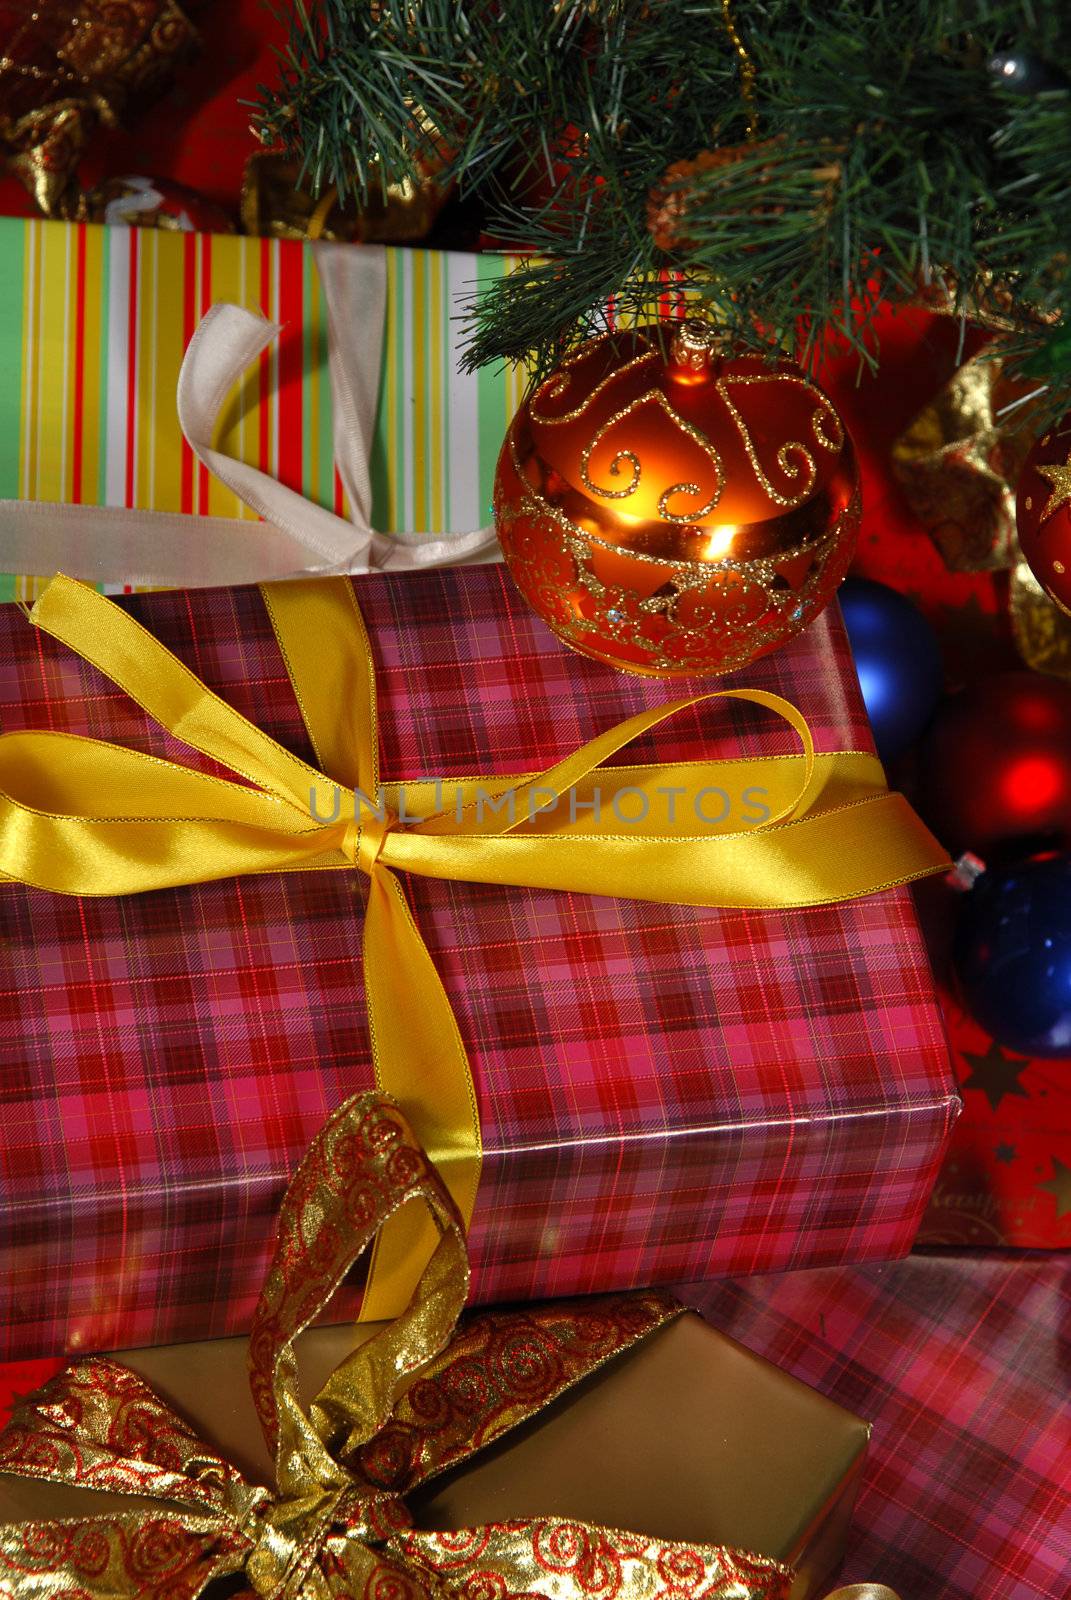 Gifts under the Christmas tree by fotorutkowscy